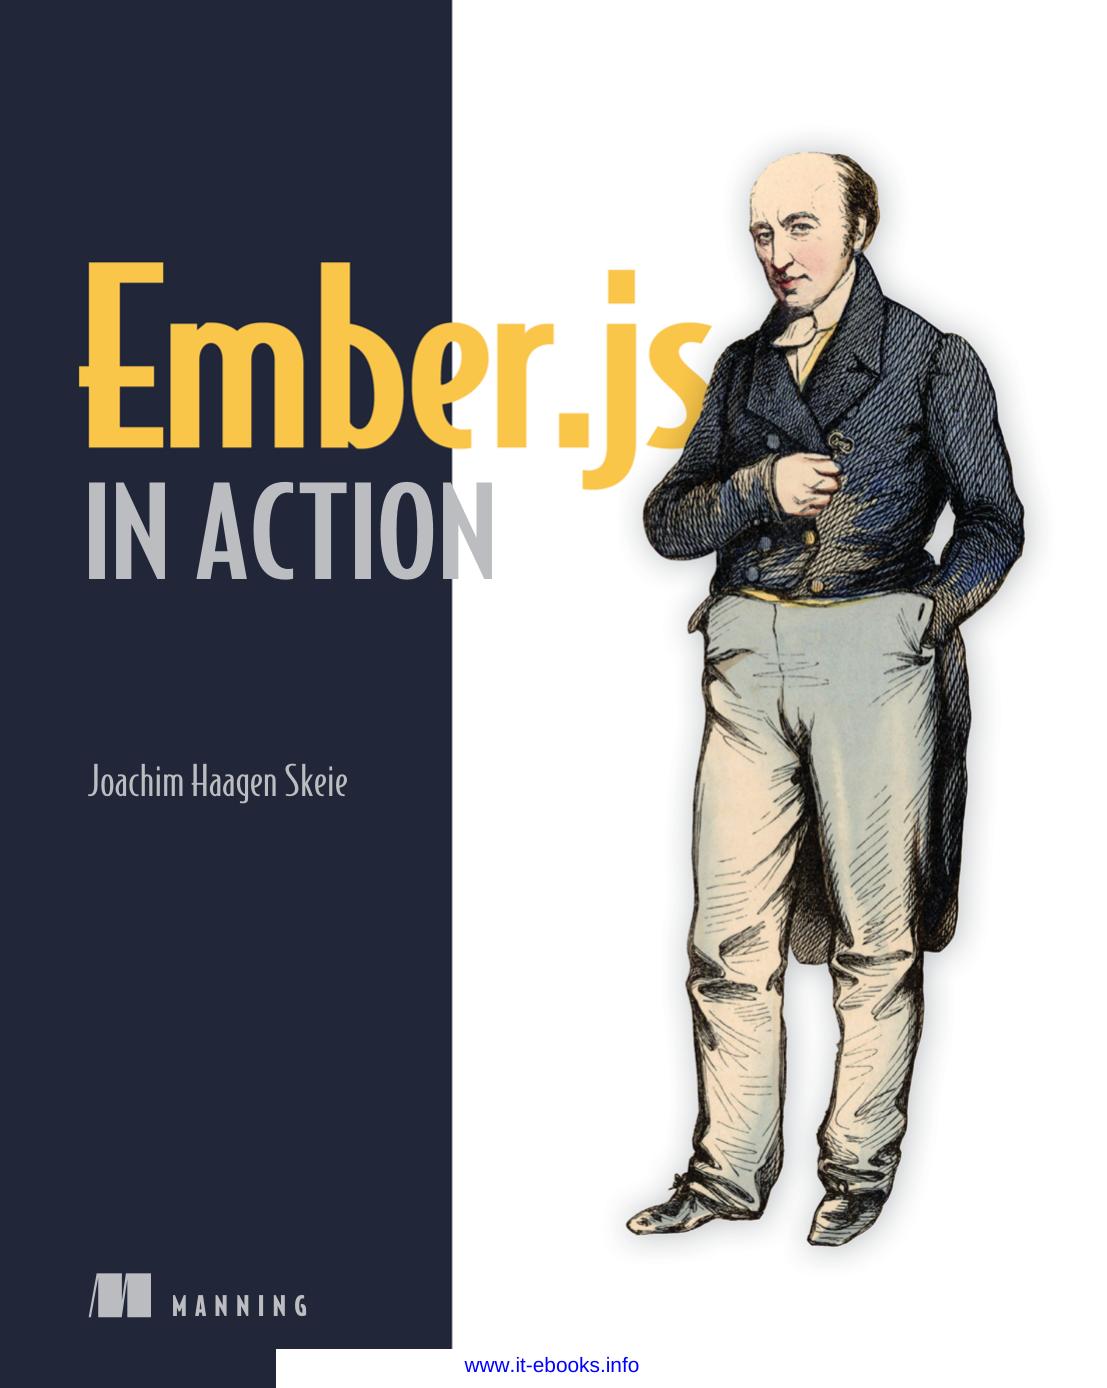 Ember.js in Action by Joachim Haagen Skeie